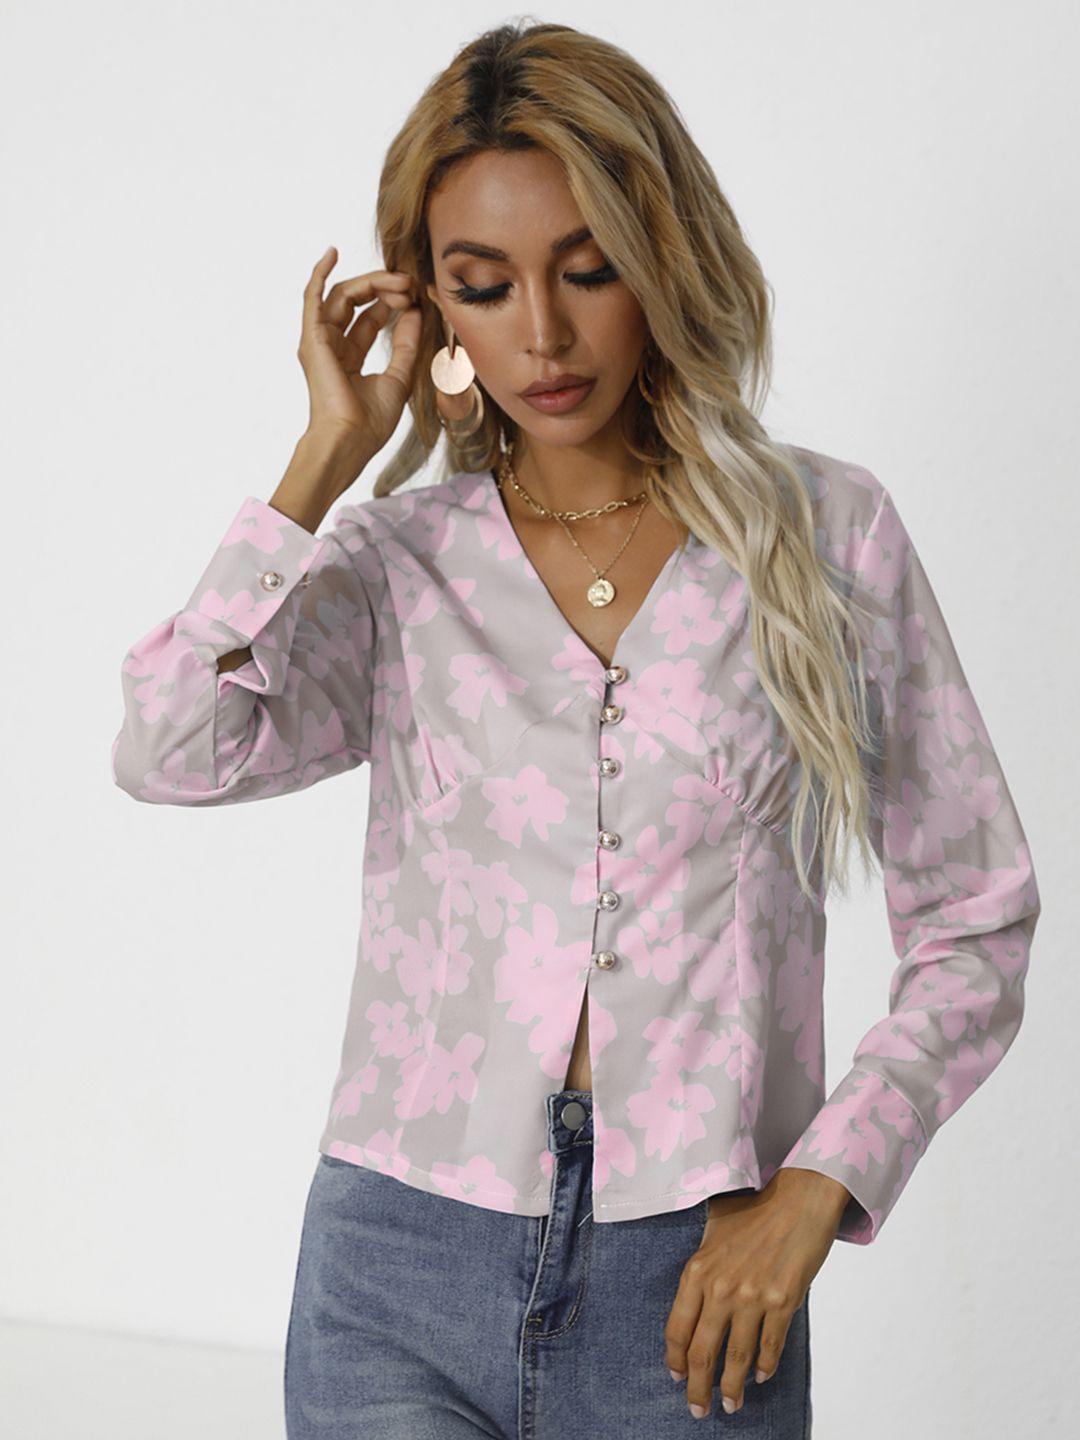 urbanic pink & beige floral print shirt style top